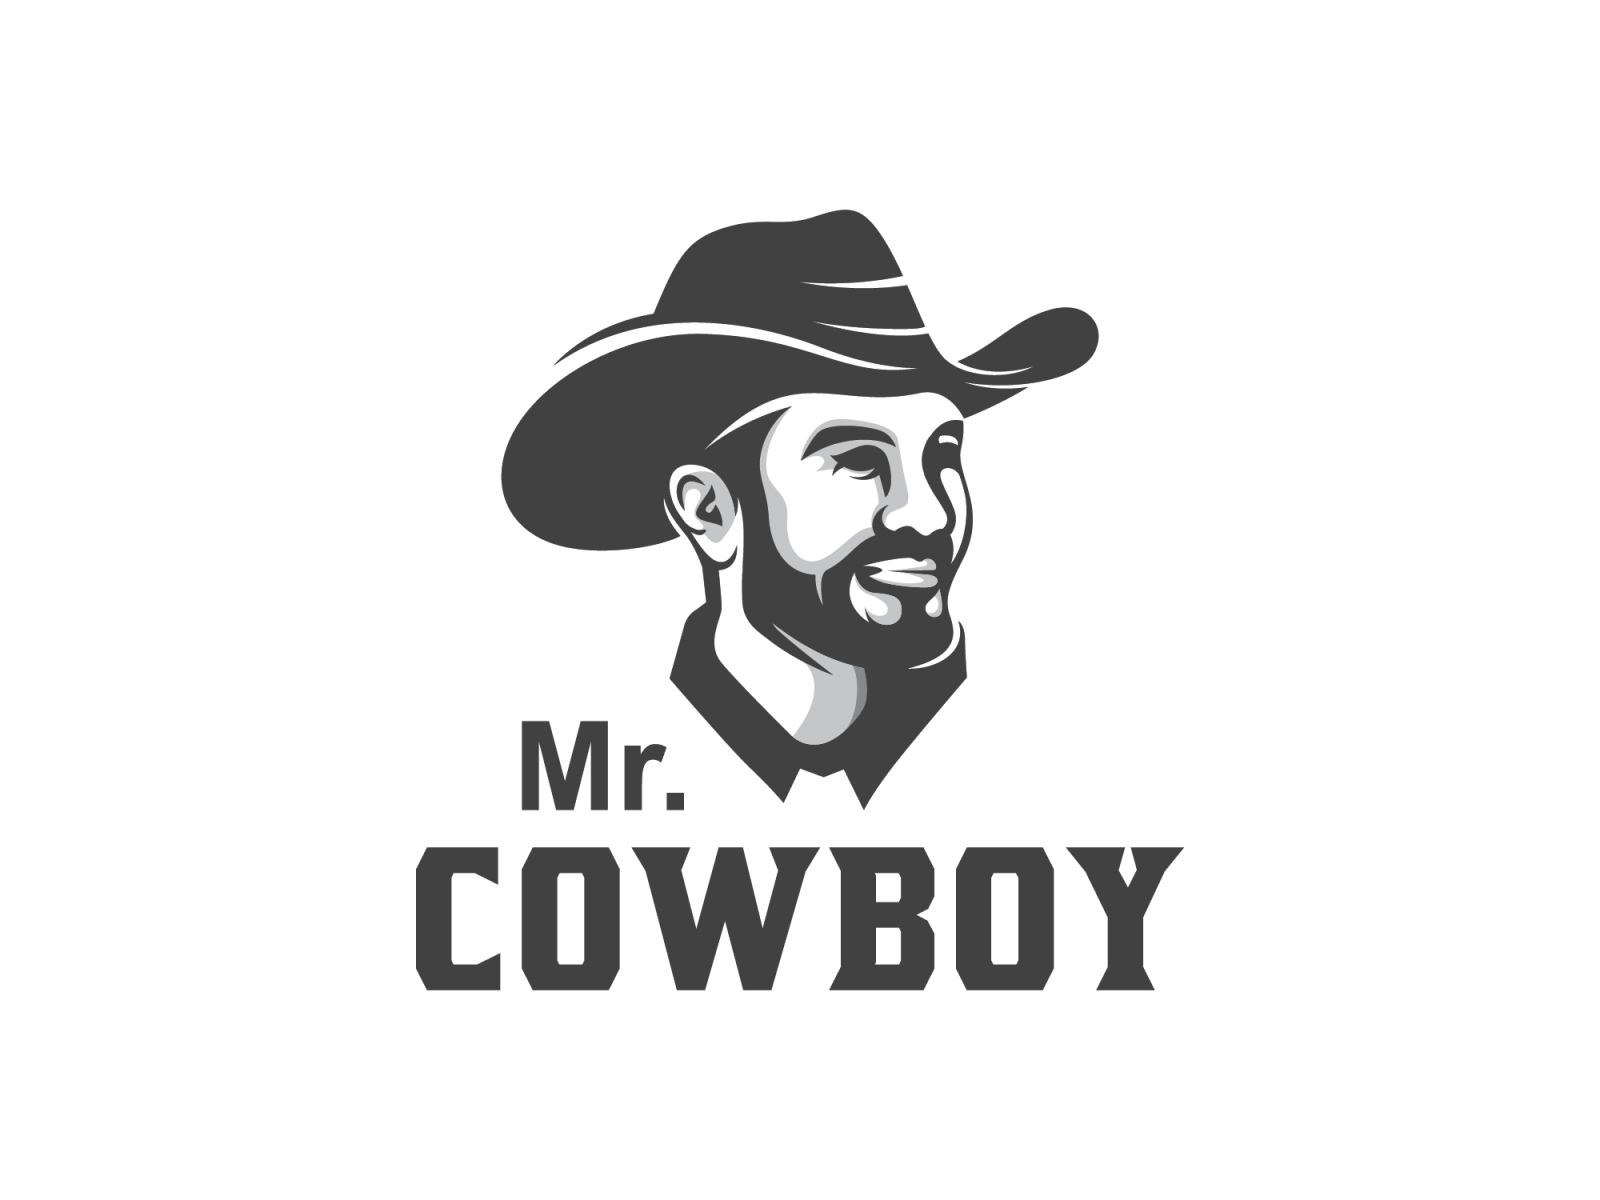 western cowboy vintage logo design by Agung cs on Dribbble